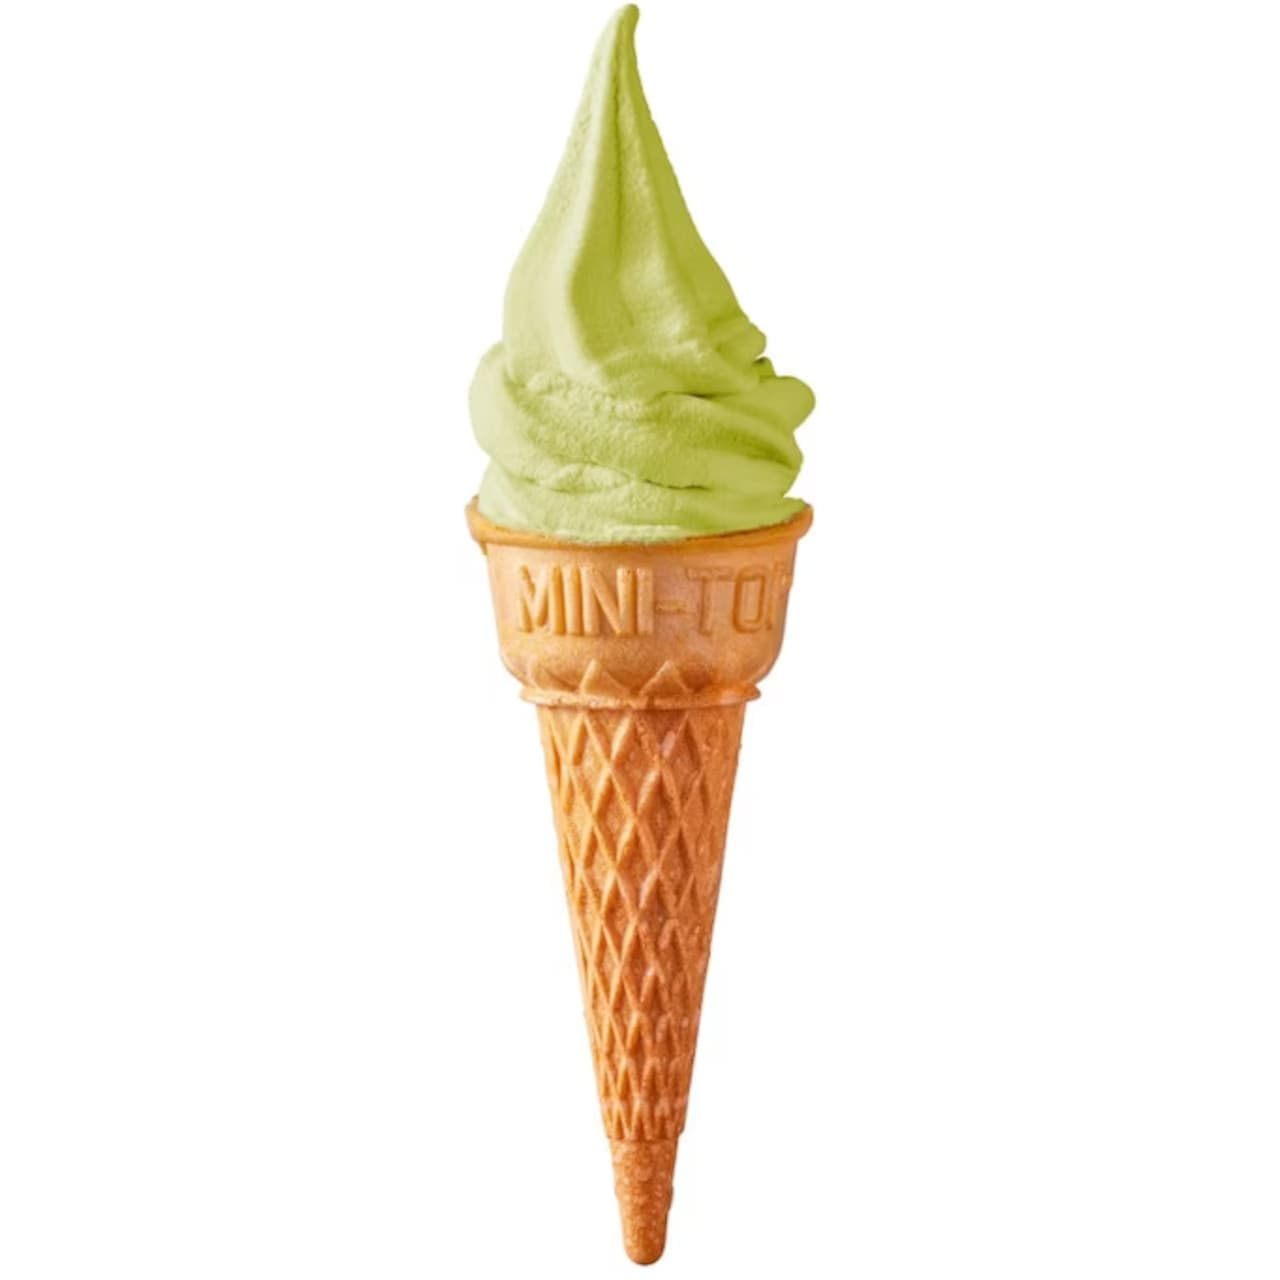 IKEA "Matcha green tea soft serve ice cream